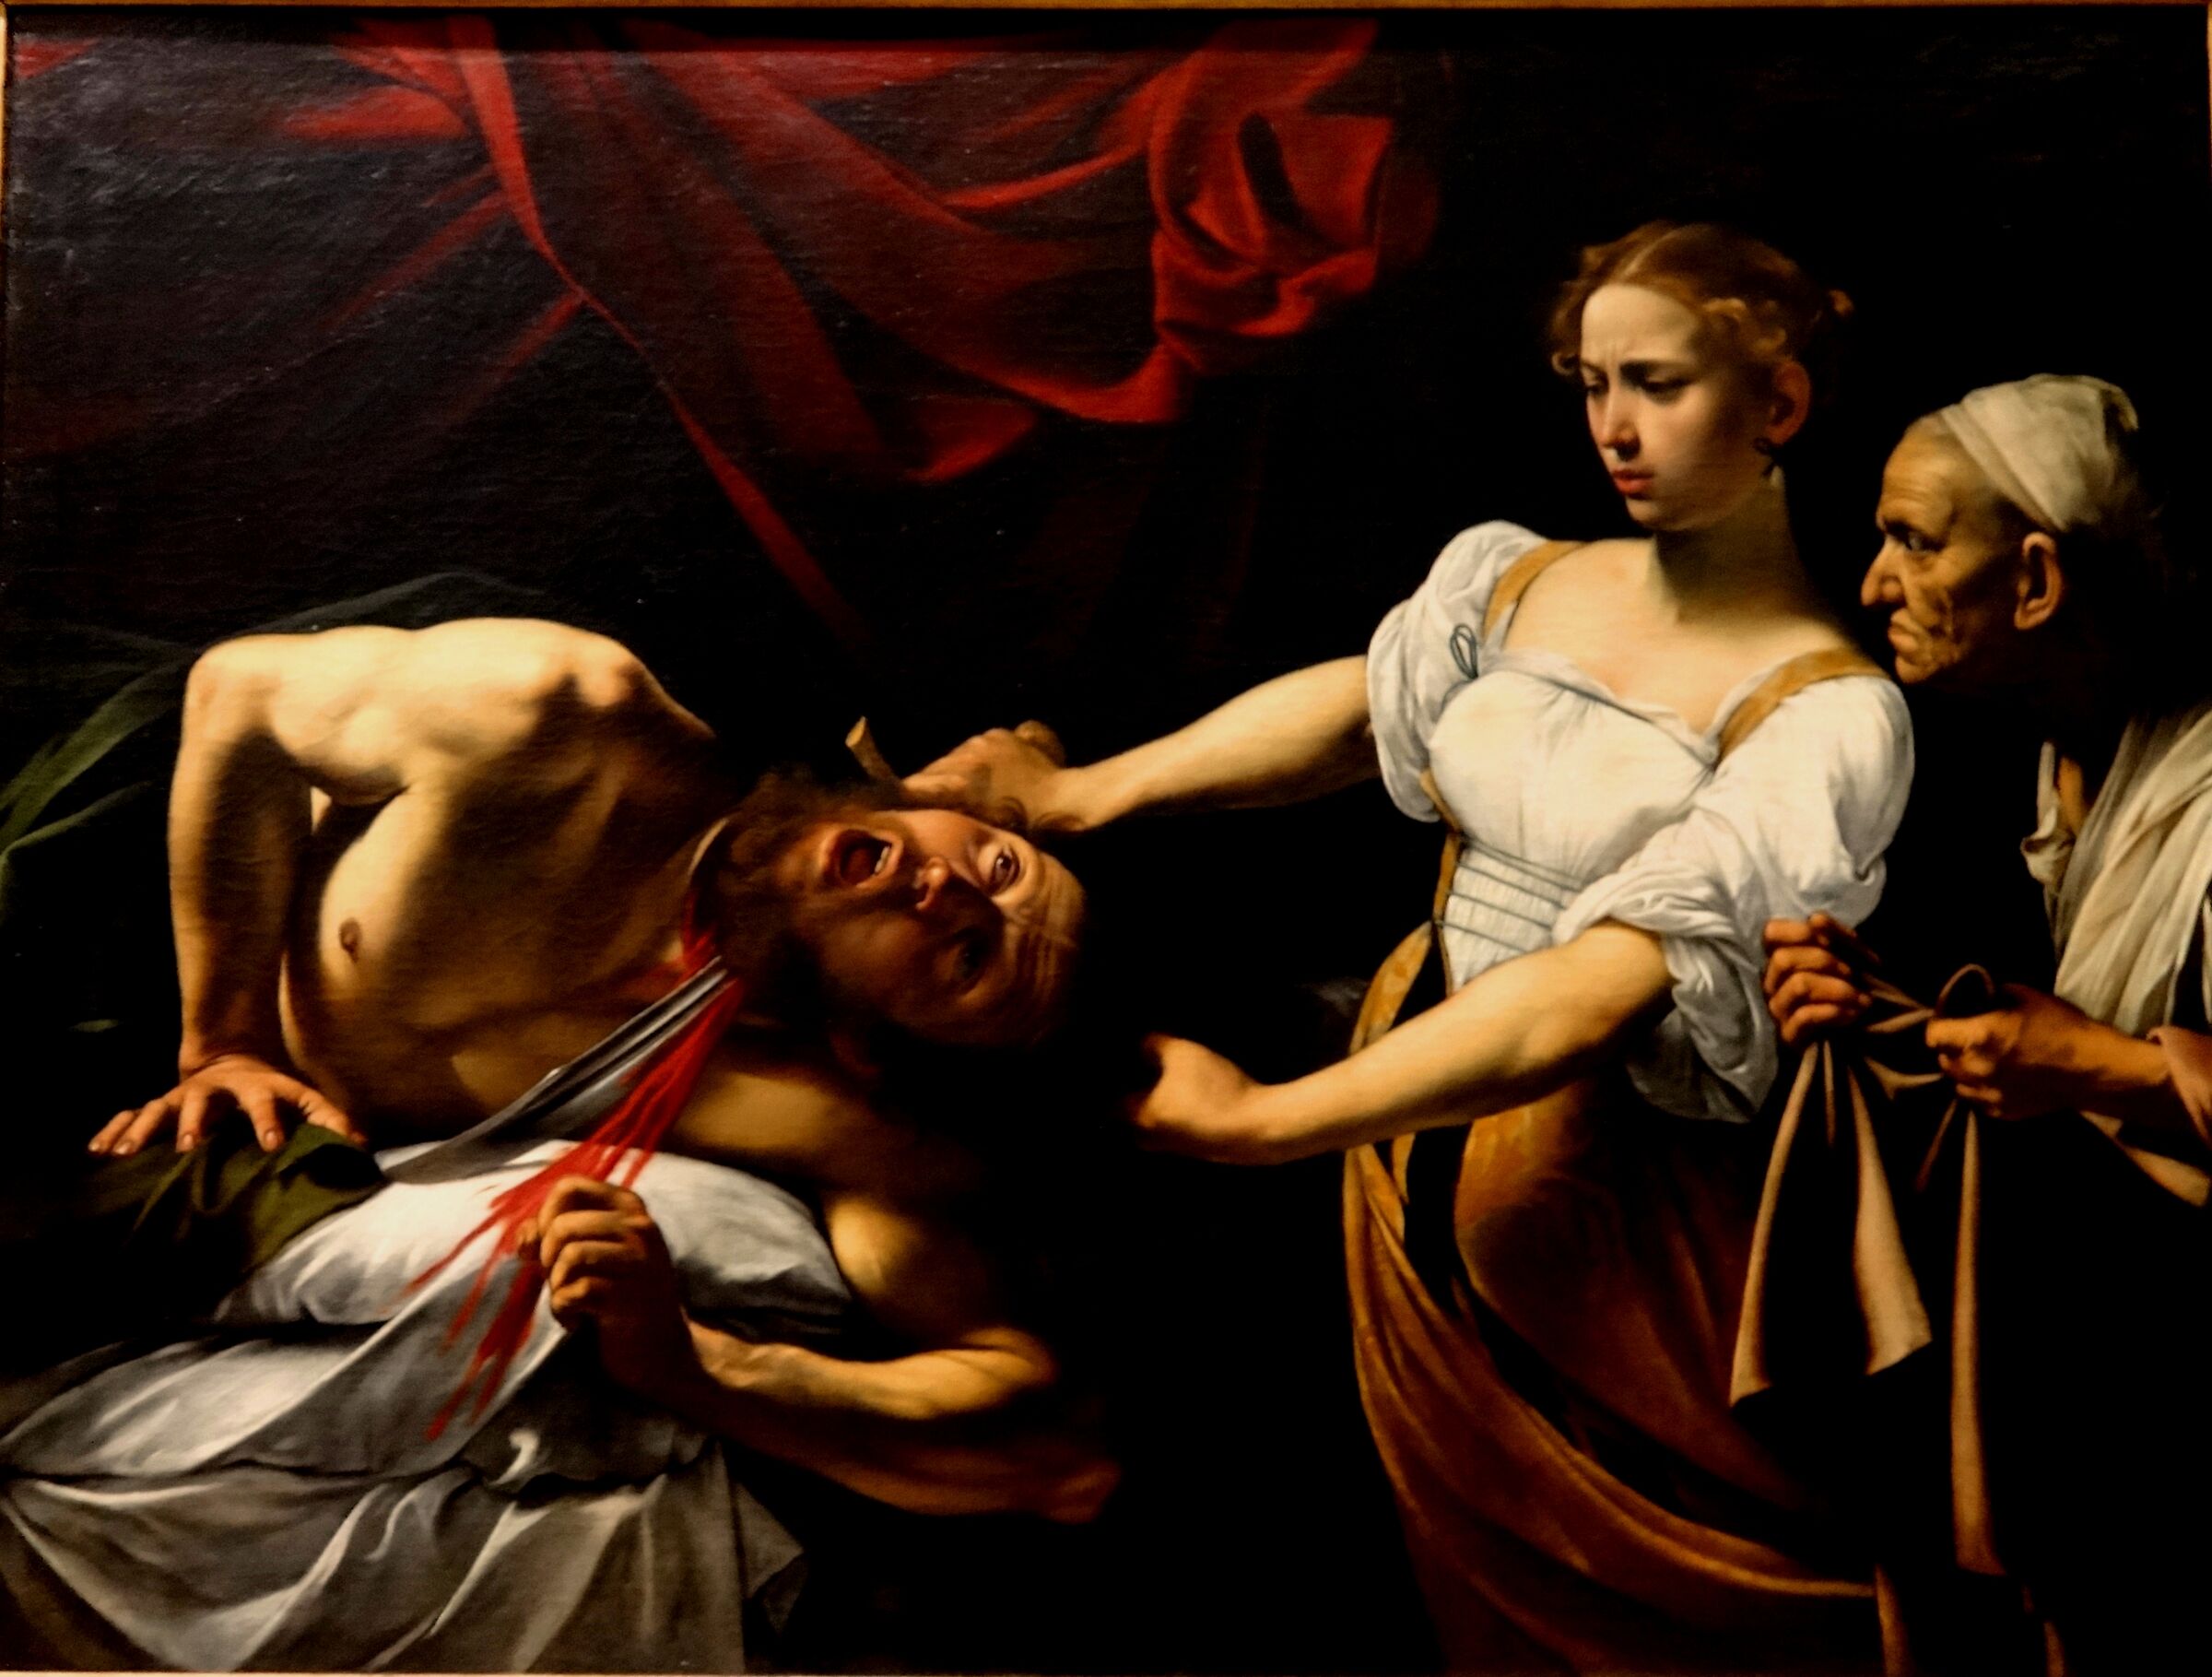 Barberini Gallery - Caravaggio "Judith and Holofernes"...